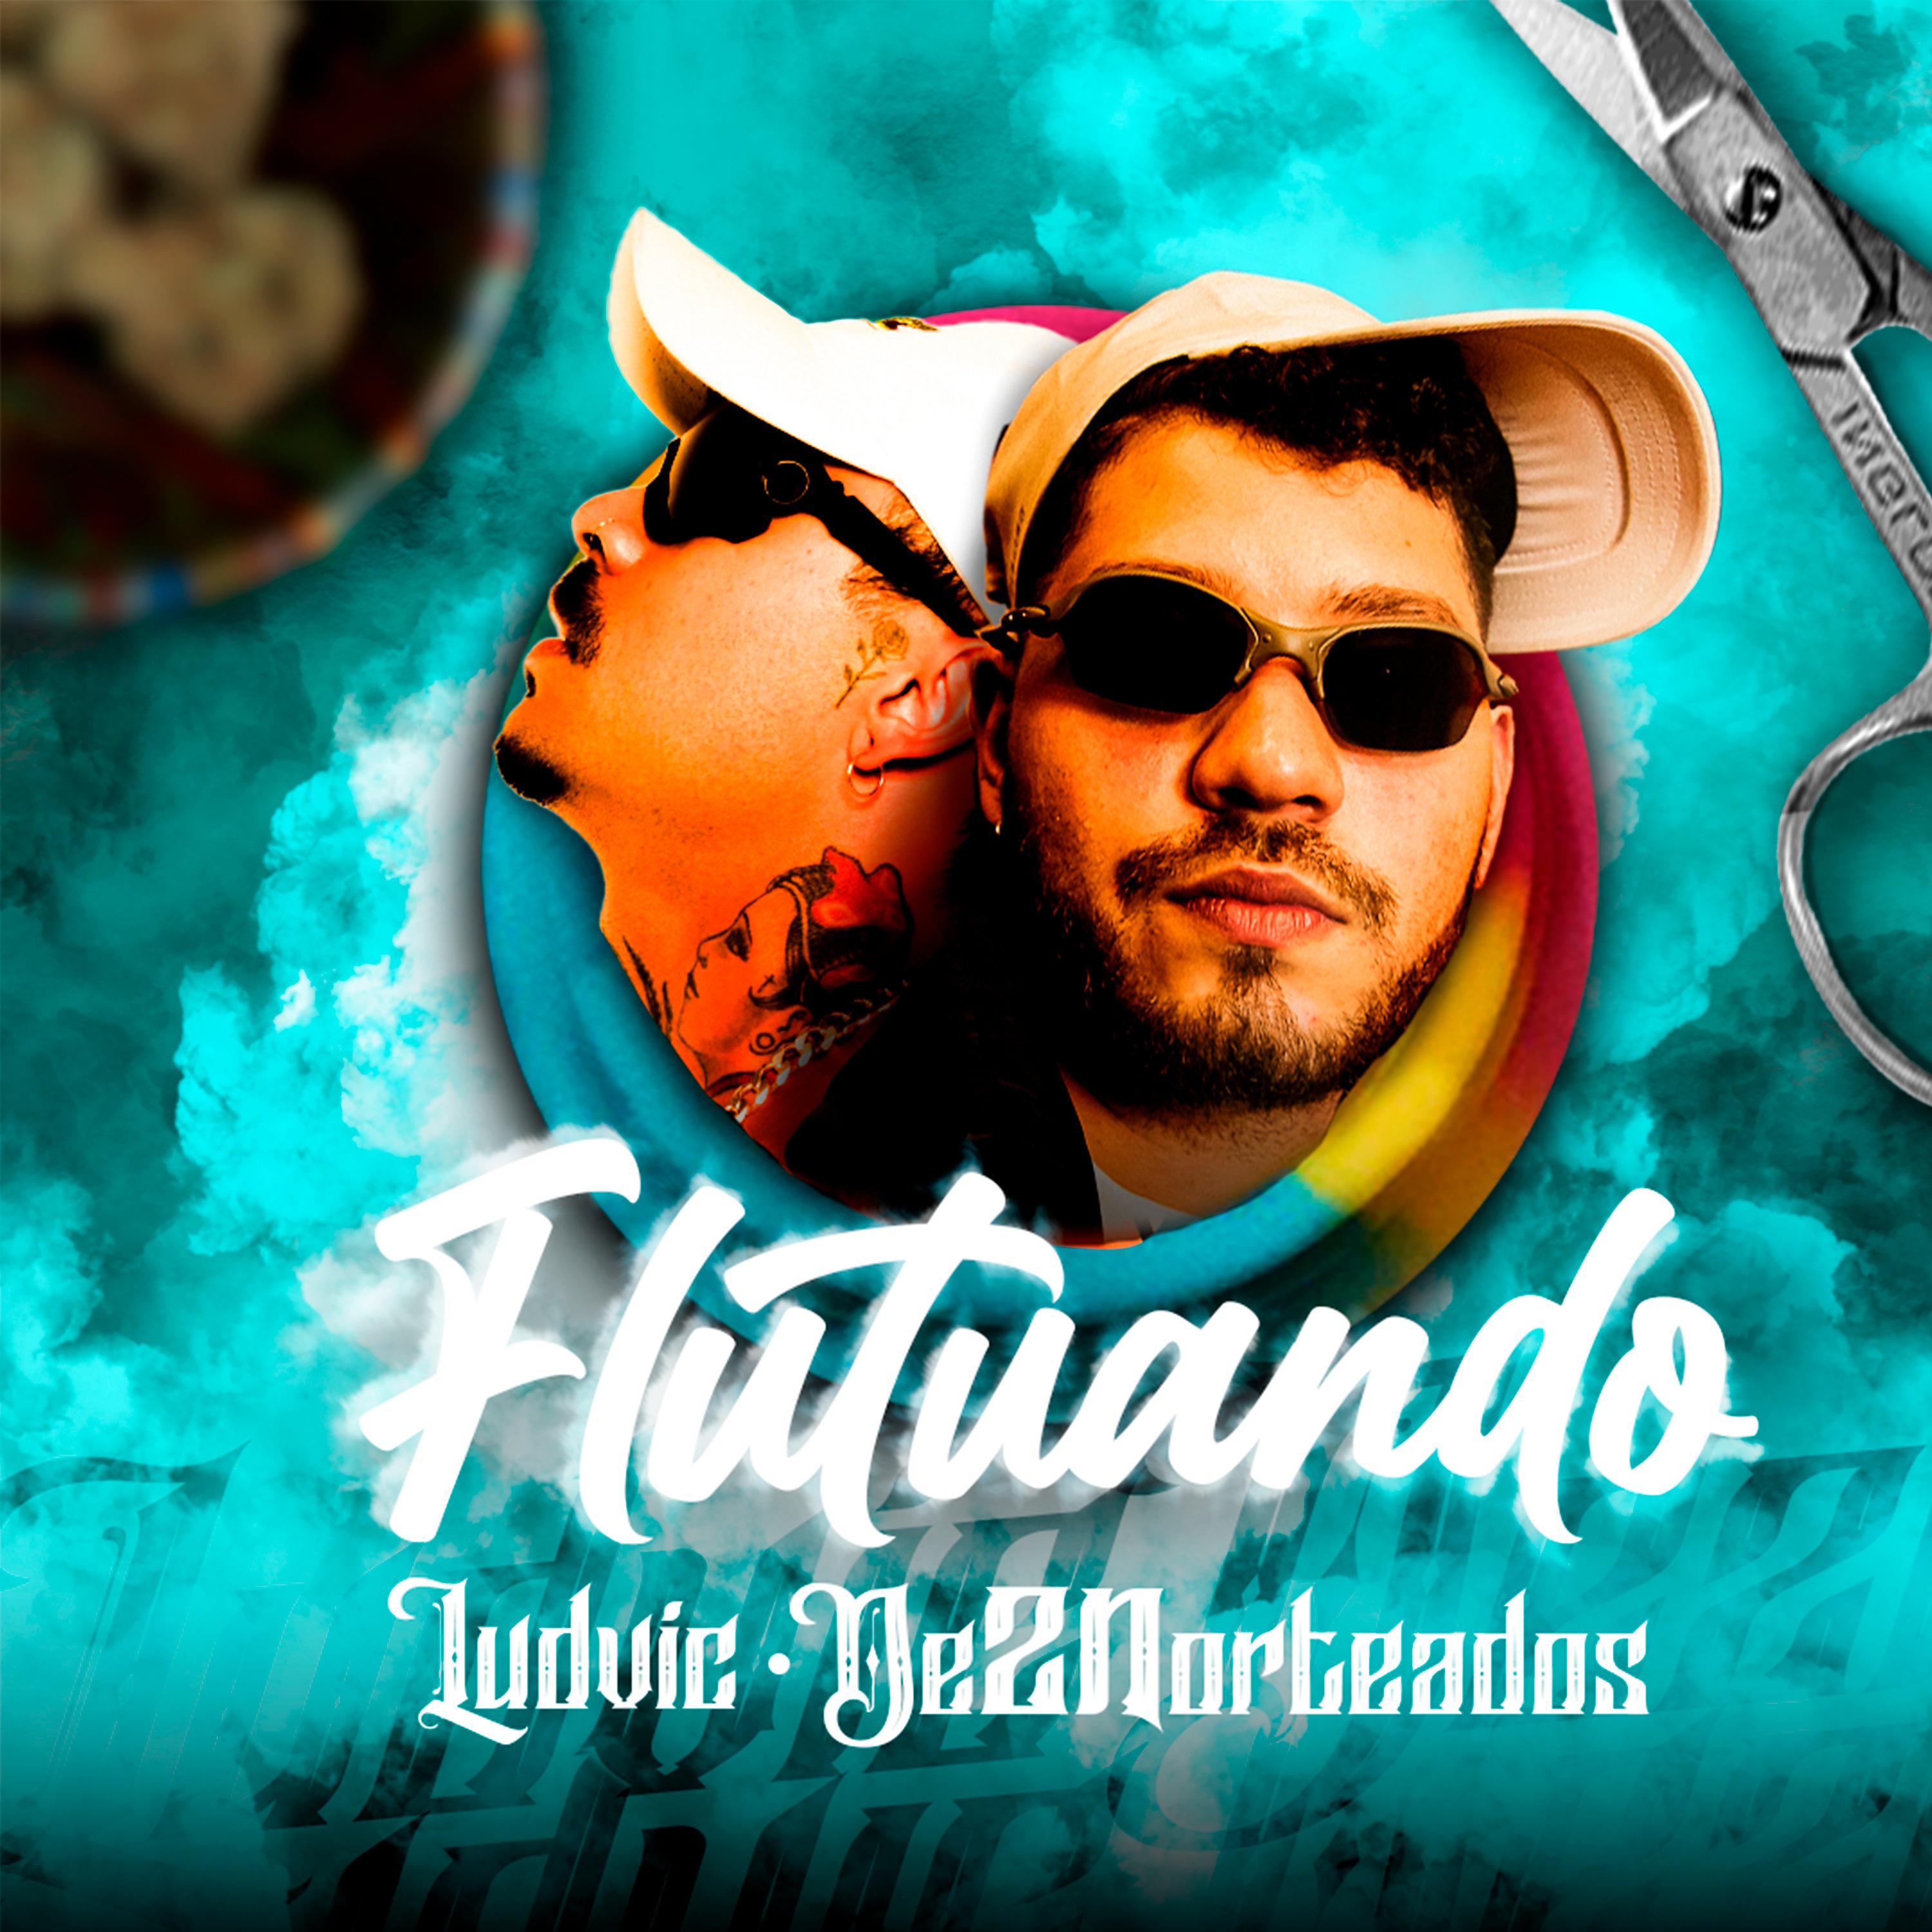 Постер альбома Flutuando